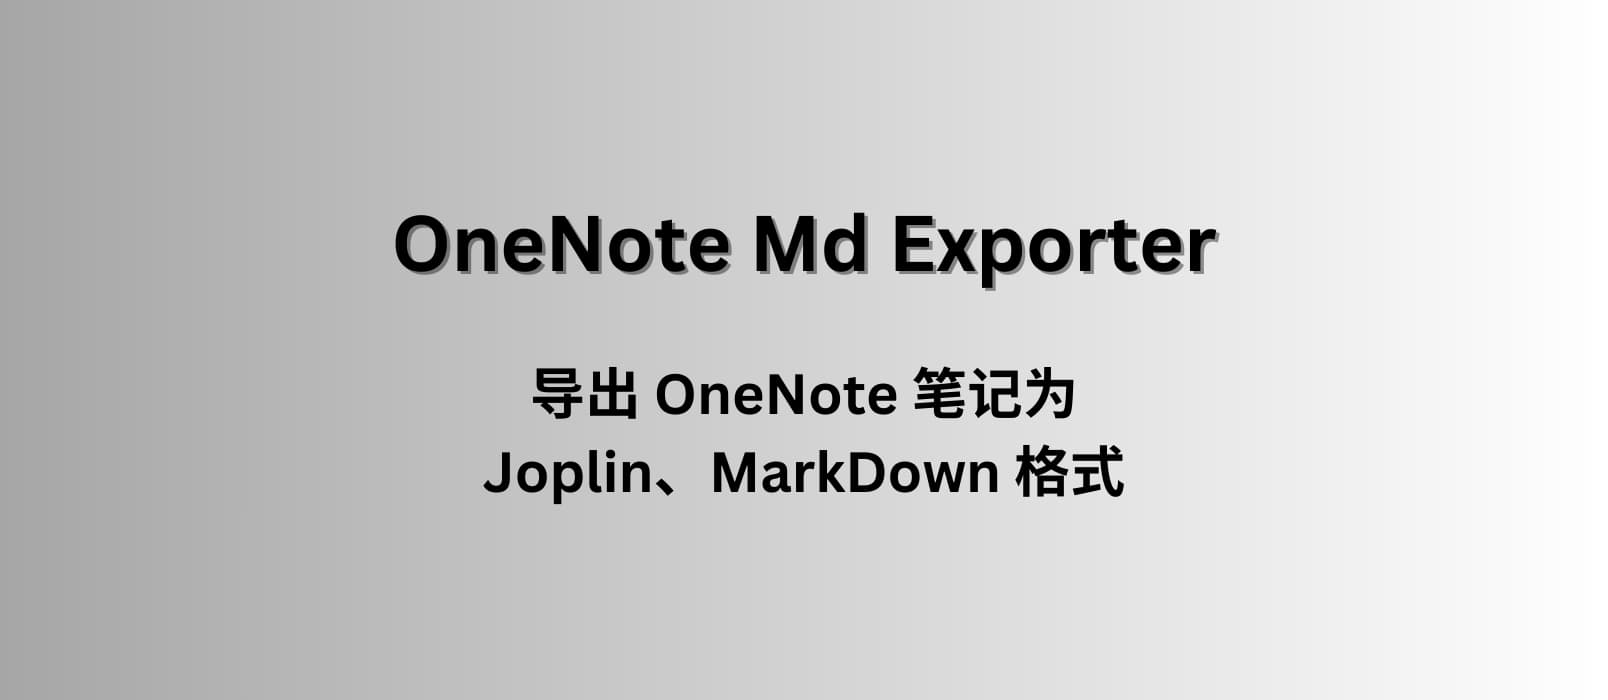 OneNote Md Exporter - 一键导出 OneNote 笔记为 Joplin、MarkDown 格式[Windows]